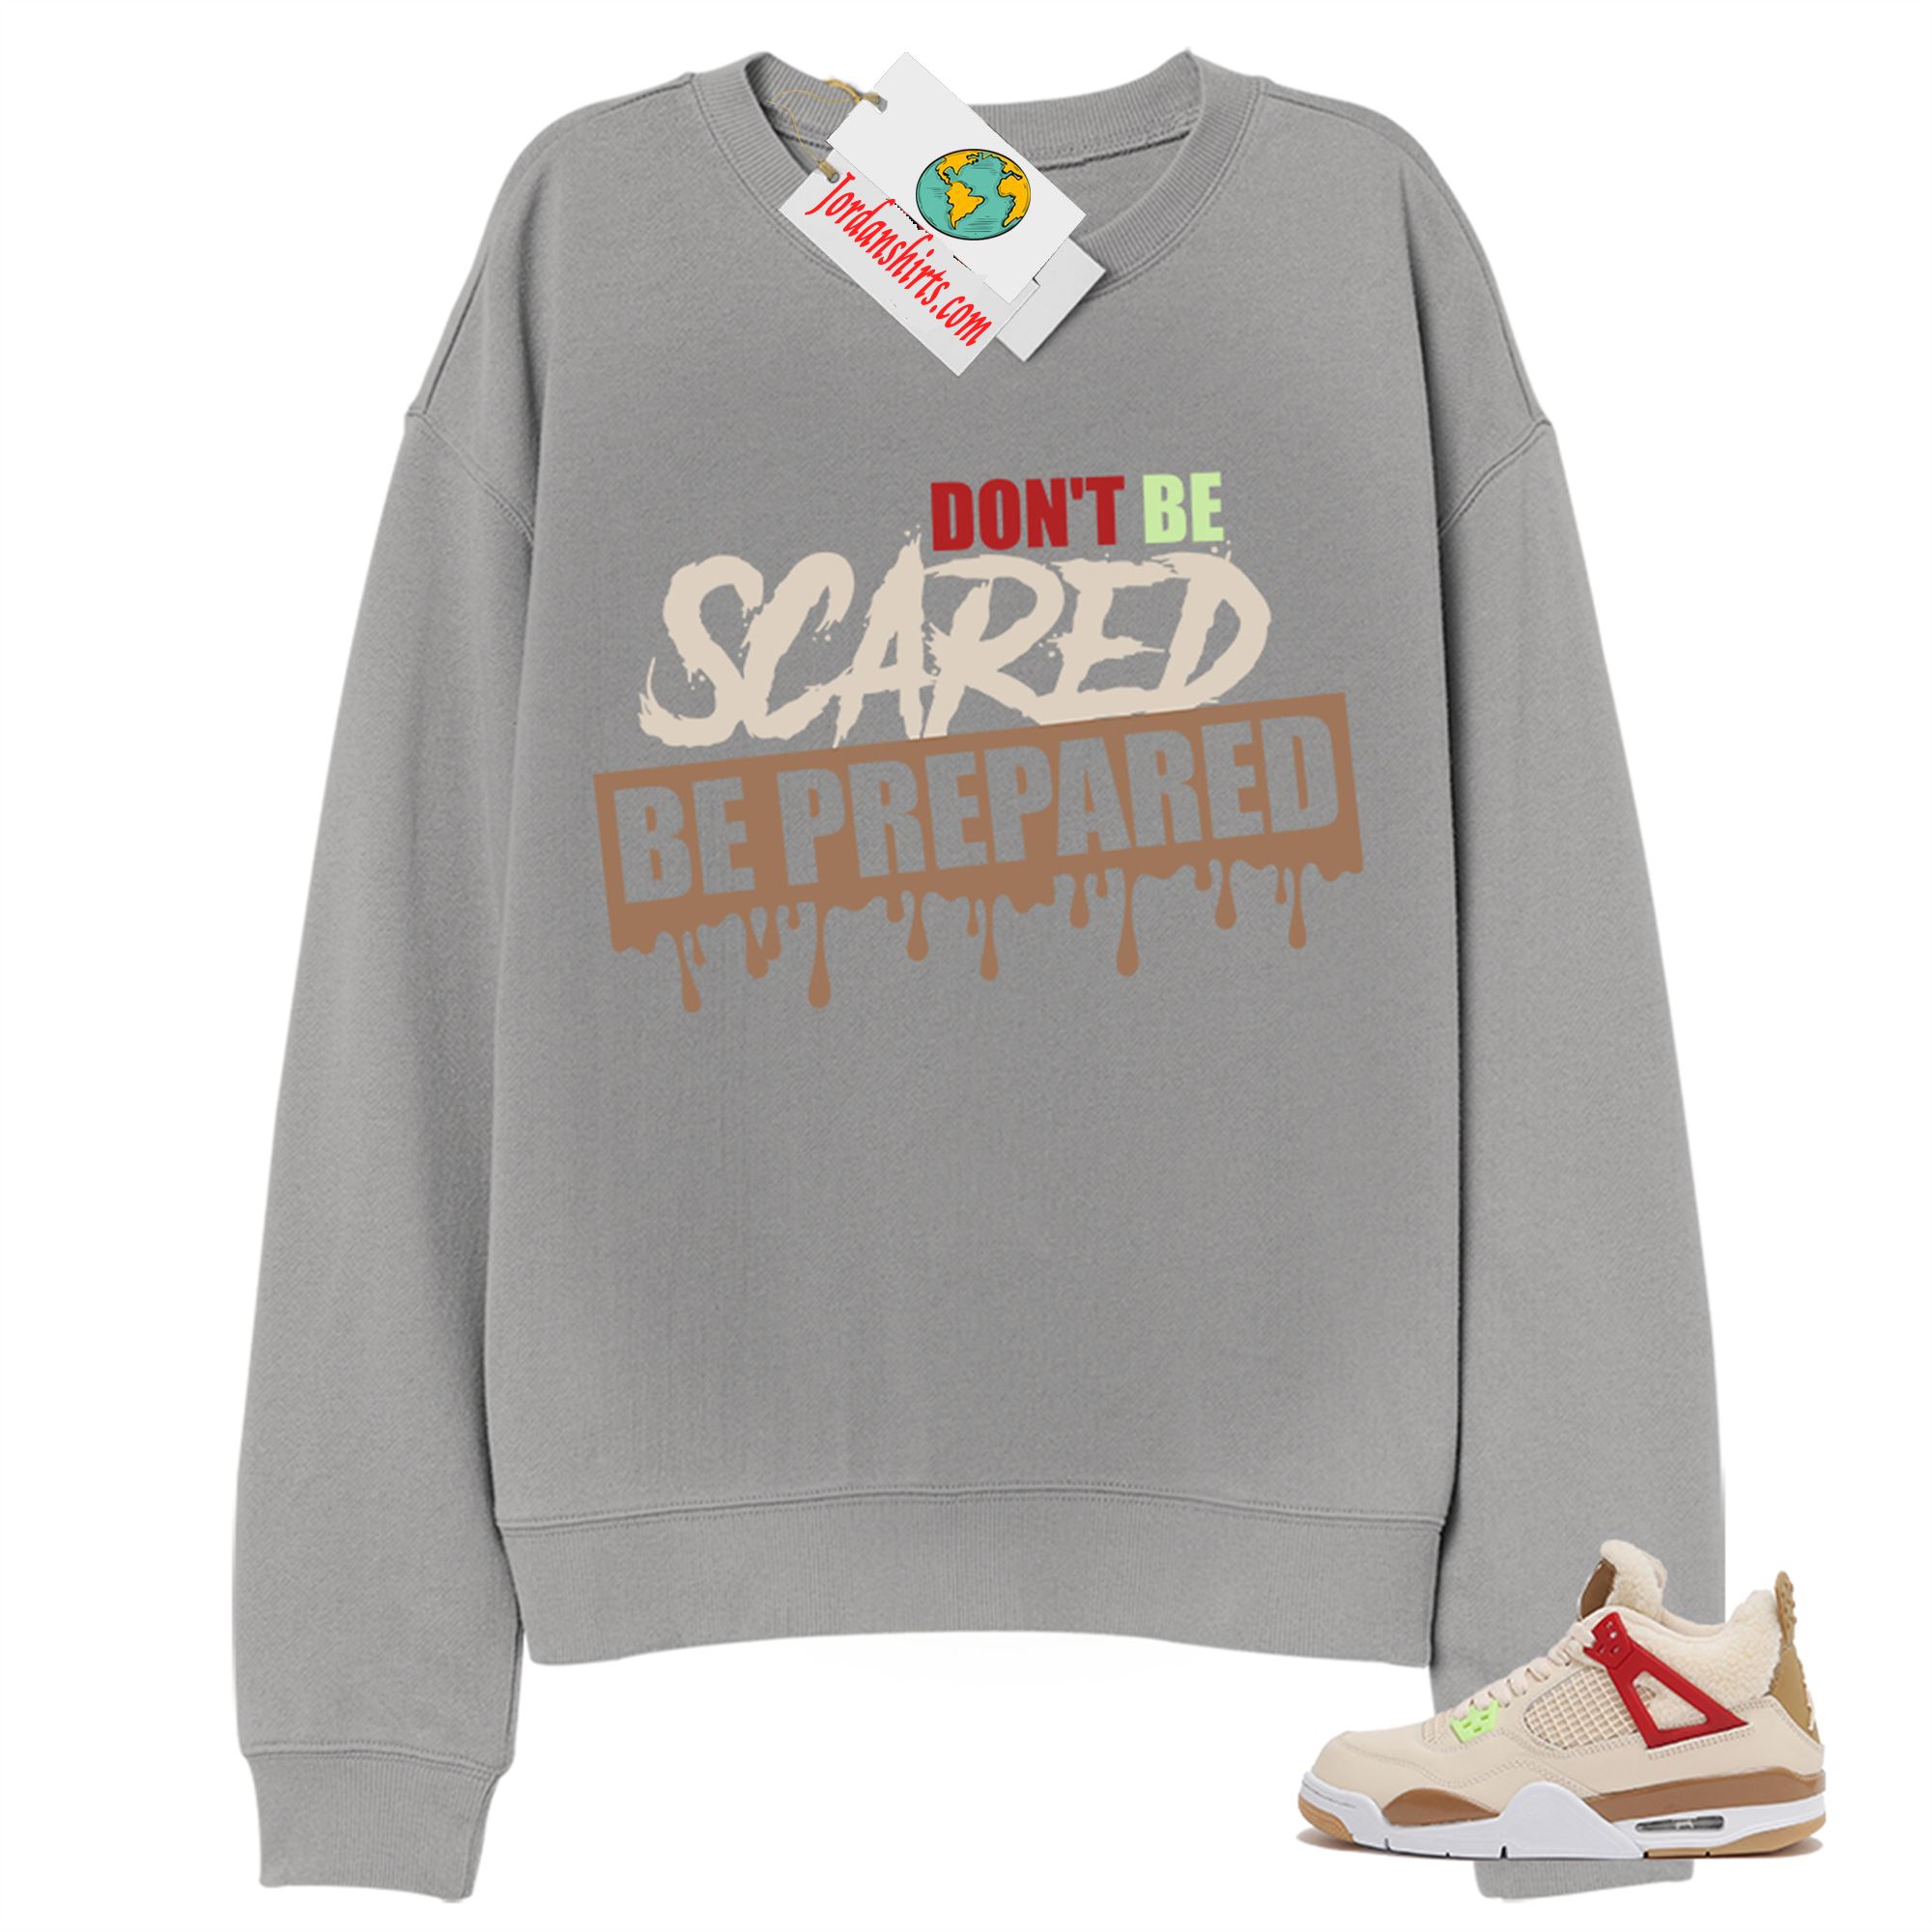 Jordan 4 Sweatshirt, Dont Be Scared Be Prepared Grey Sweatshirt Air Jordan 4 Wild Things 4s Plus Size Up To 5xl